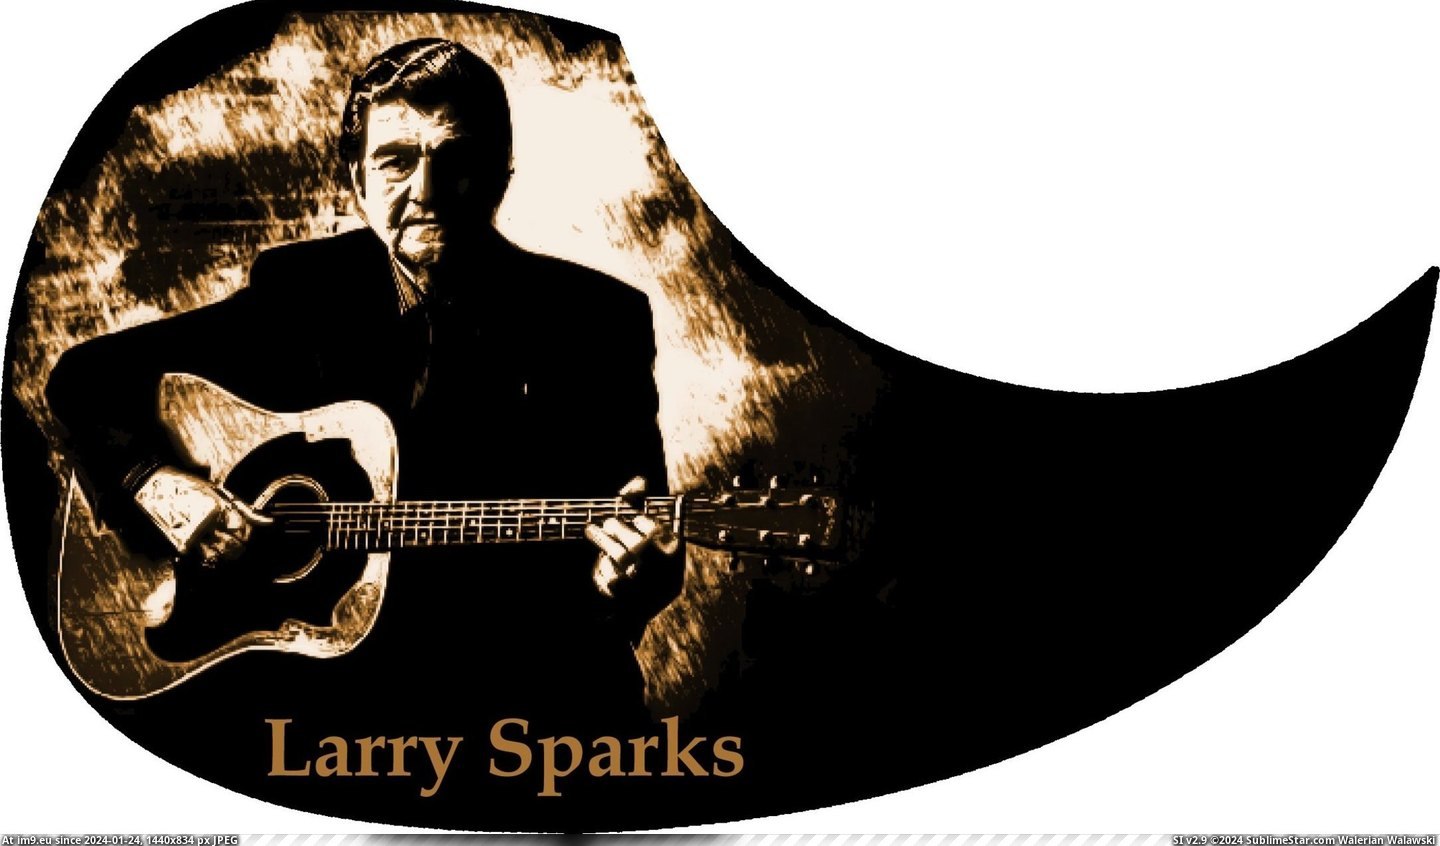 #Pick #Larry #Sparks #Guard Pick Guard - Larry Sparks Pic. (Bild von album Custom Pickguard Art))